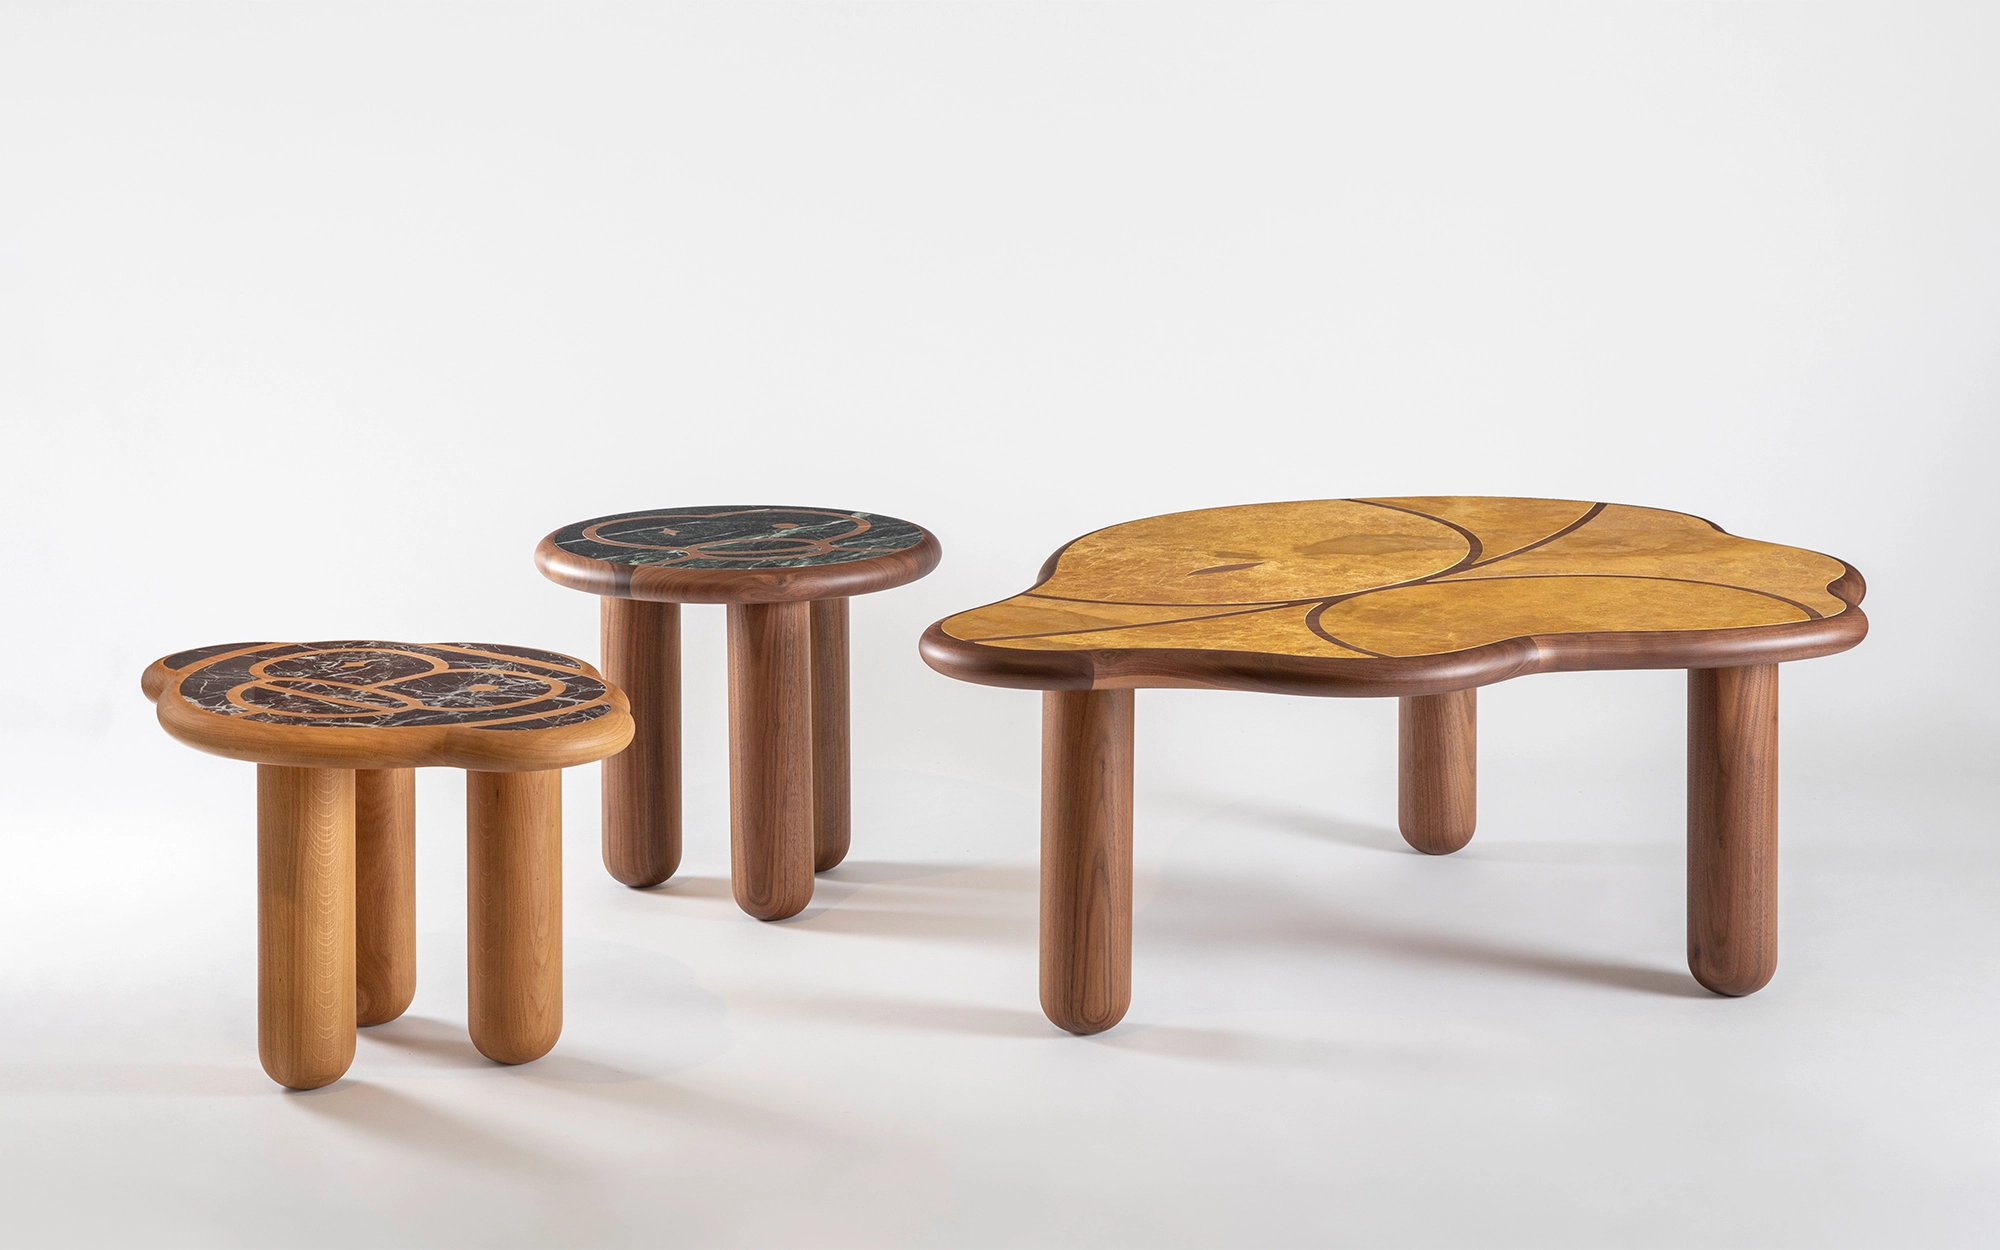 Bird coffee table - Jaime Hayon - Coffee table - Galerie kreo